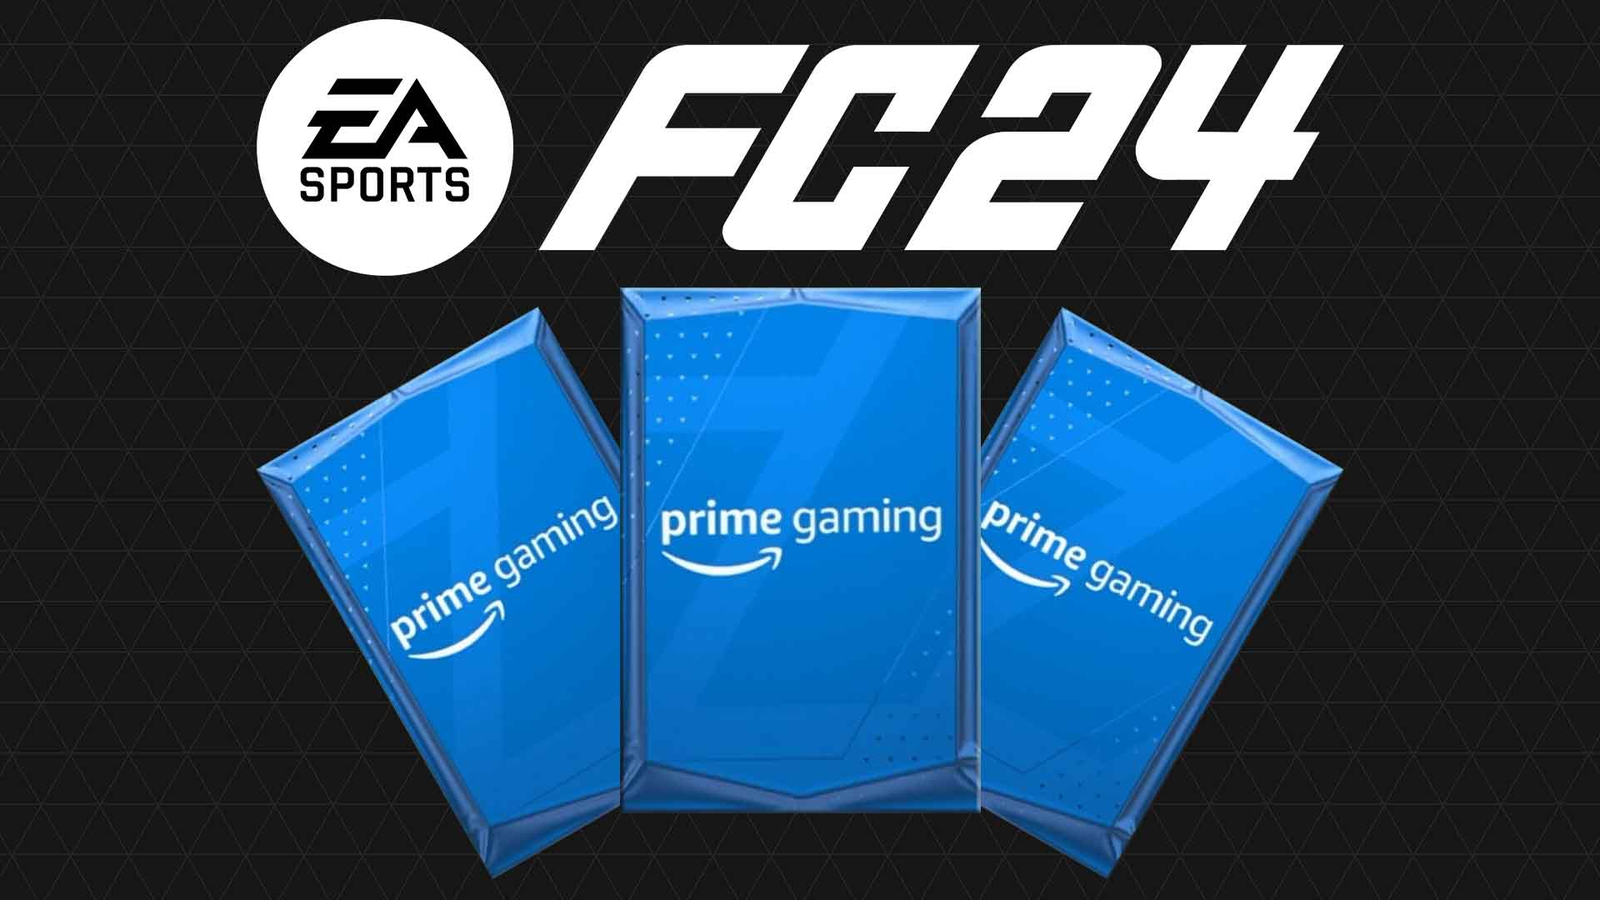 Prime Gaming Pack 2! (How to Claim Prime Gaming Pack EAFC 24) 